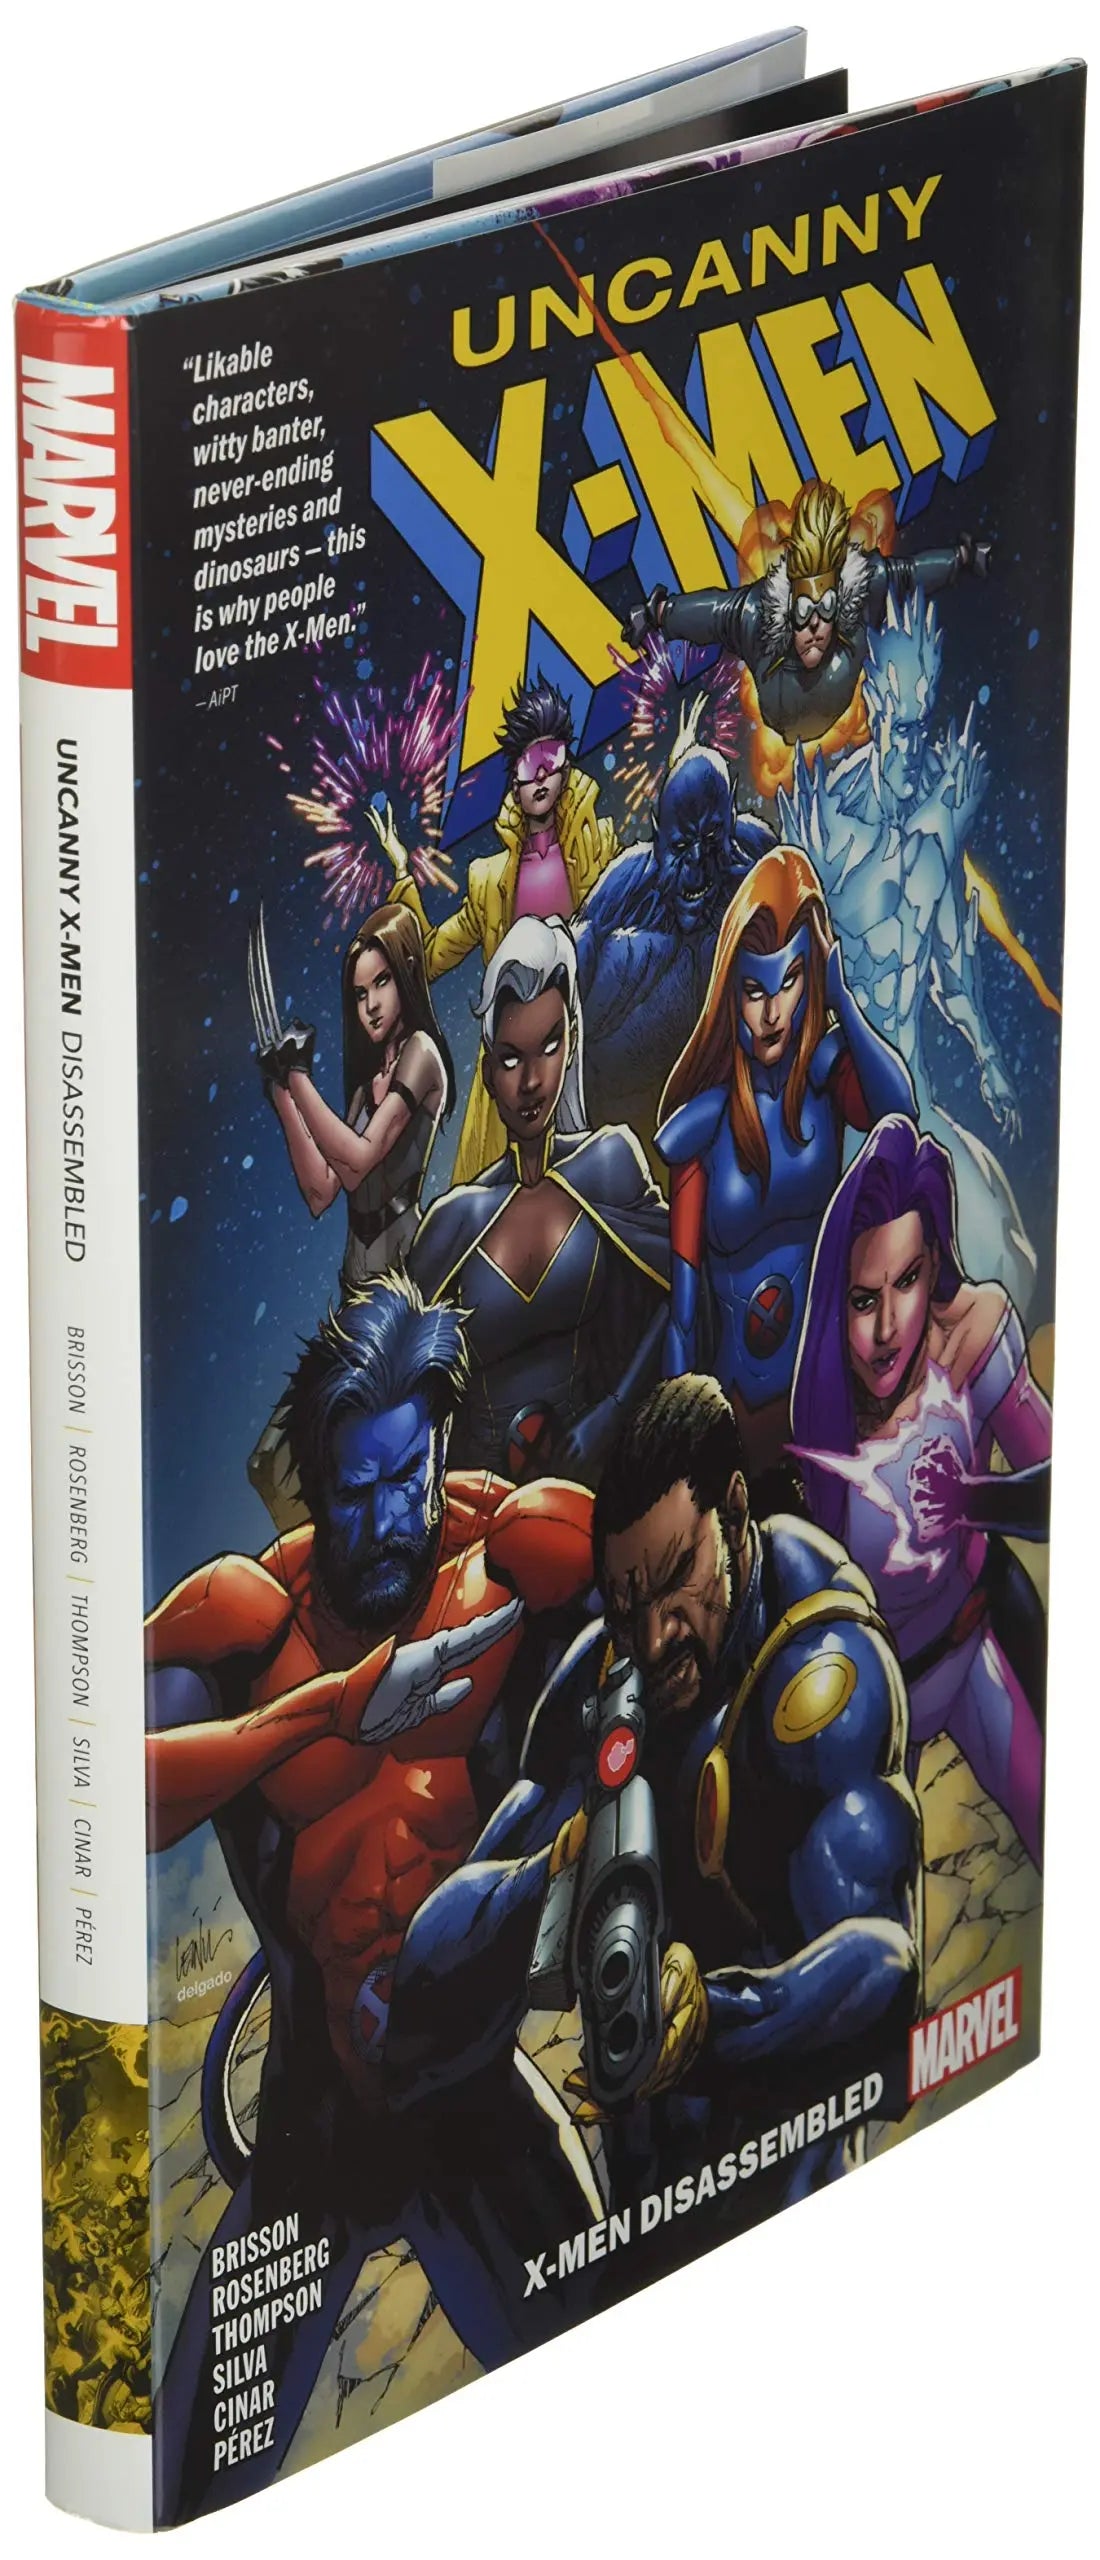 Uncanny X-Men Vol. 1: X-Men Disassembled Hardcover  Feb. 16 2021 King Gaming